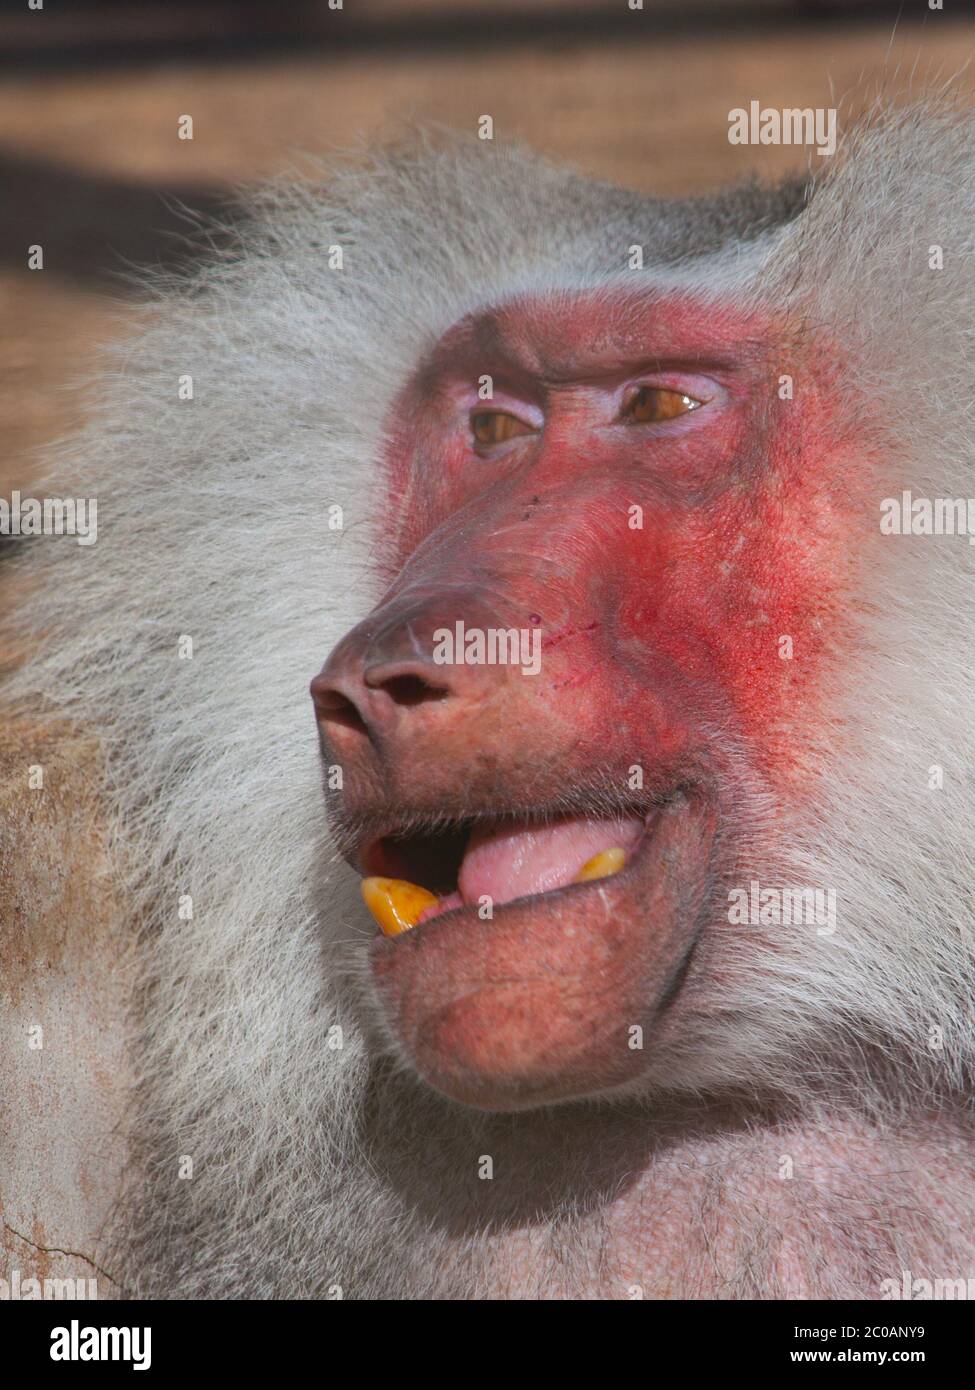 Red face of hamadryas baboon, Papio hamadryas, detailed view Stock Photo